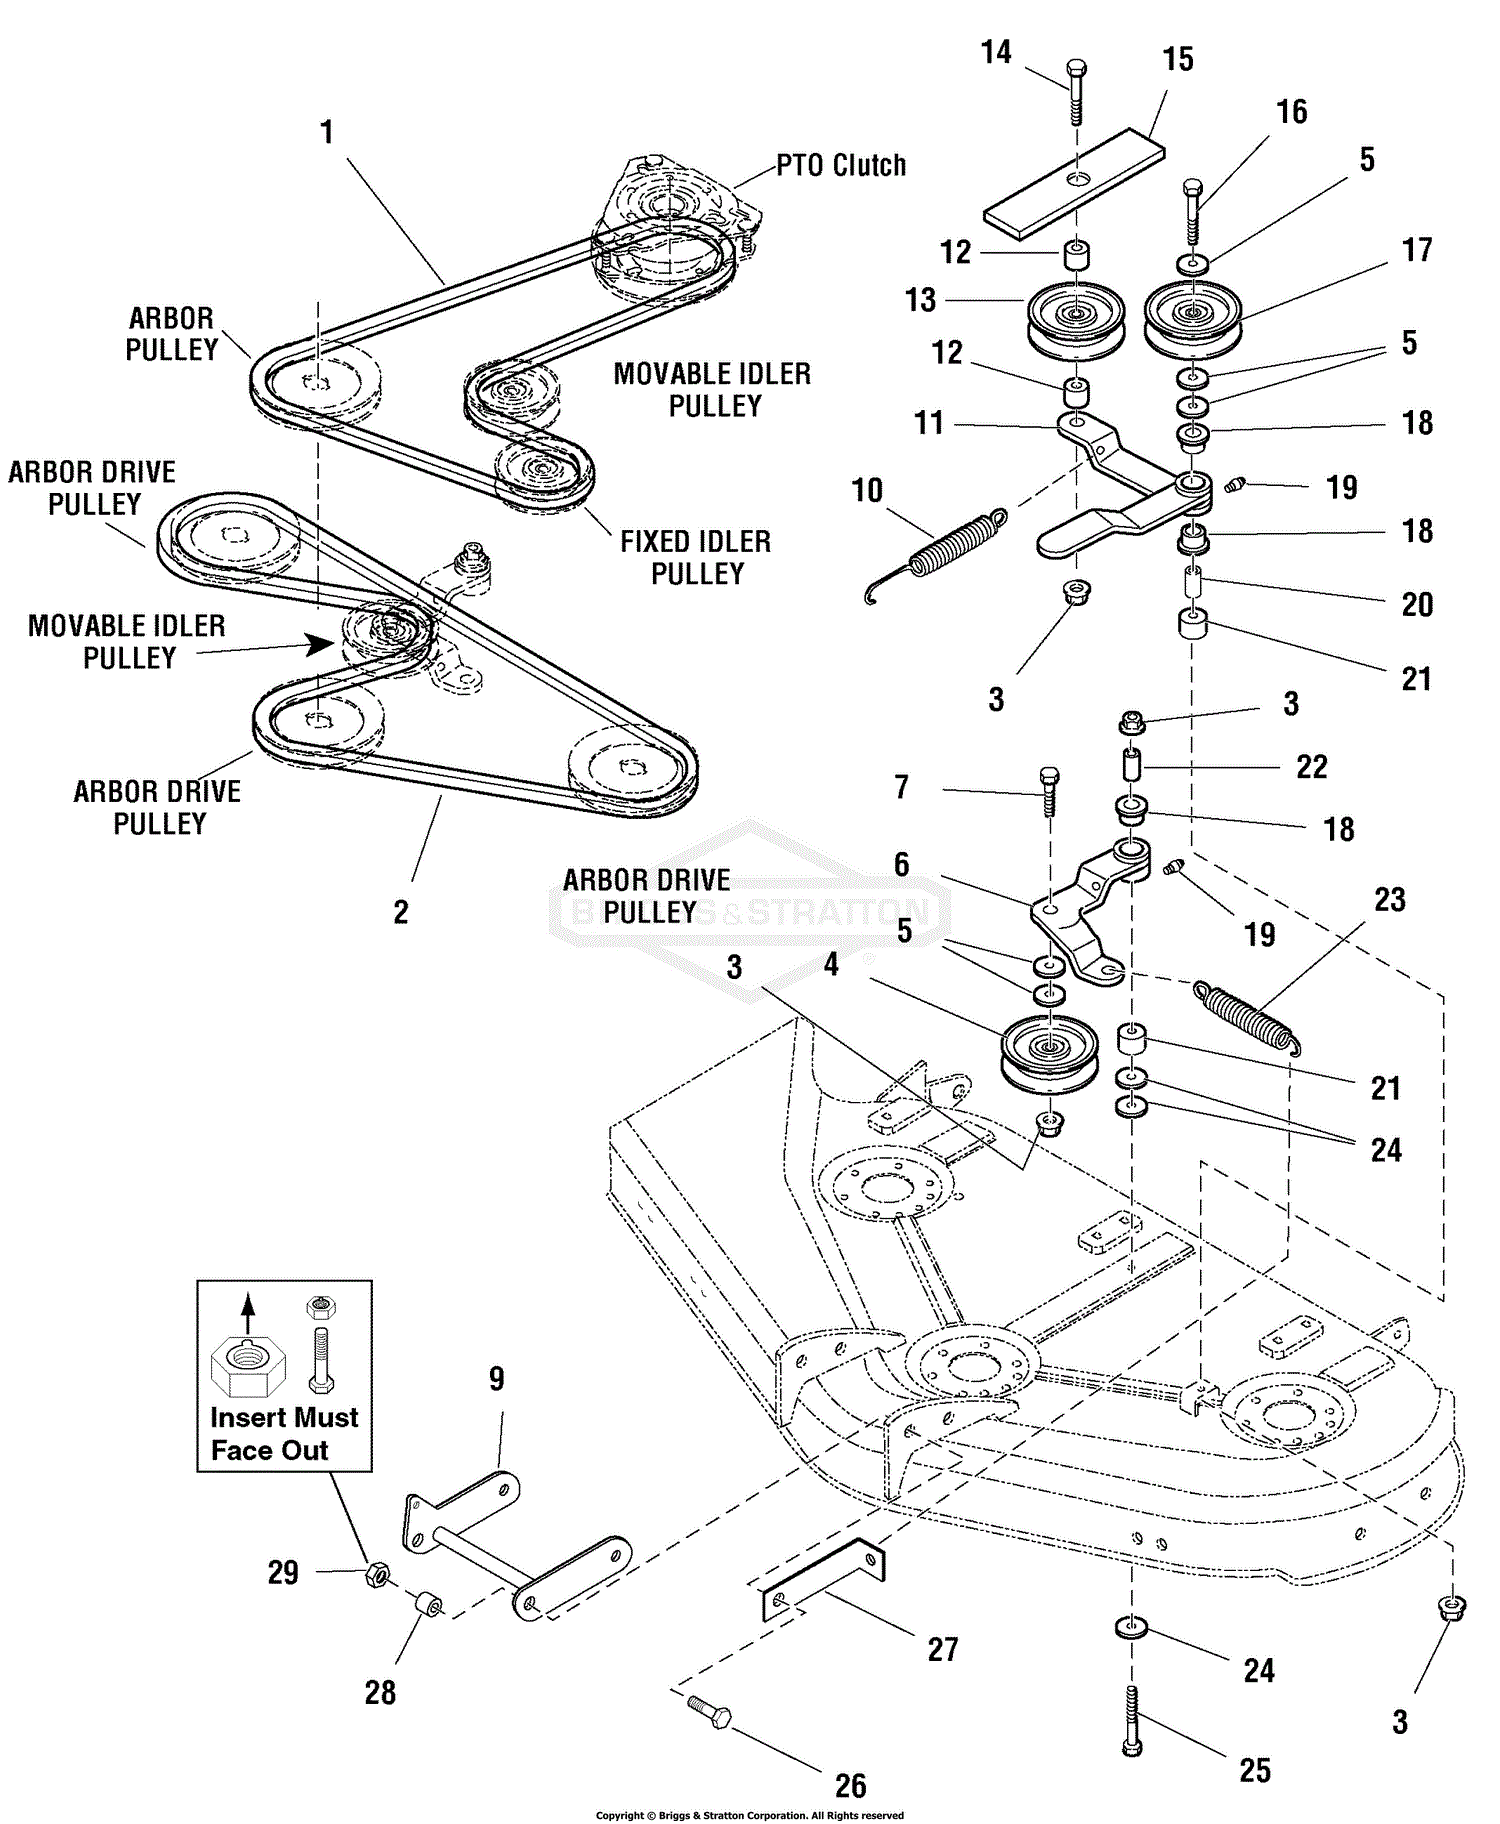 Wiring Diagram Info: 27 Simplicity 44 Inch Mower Deck Belt Diagram